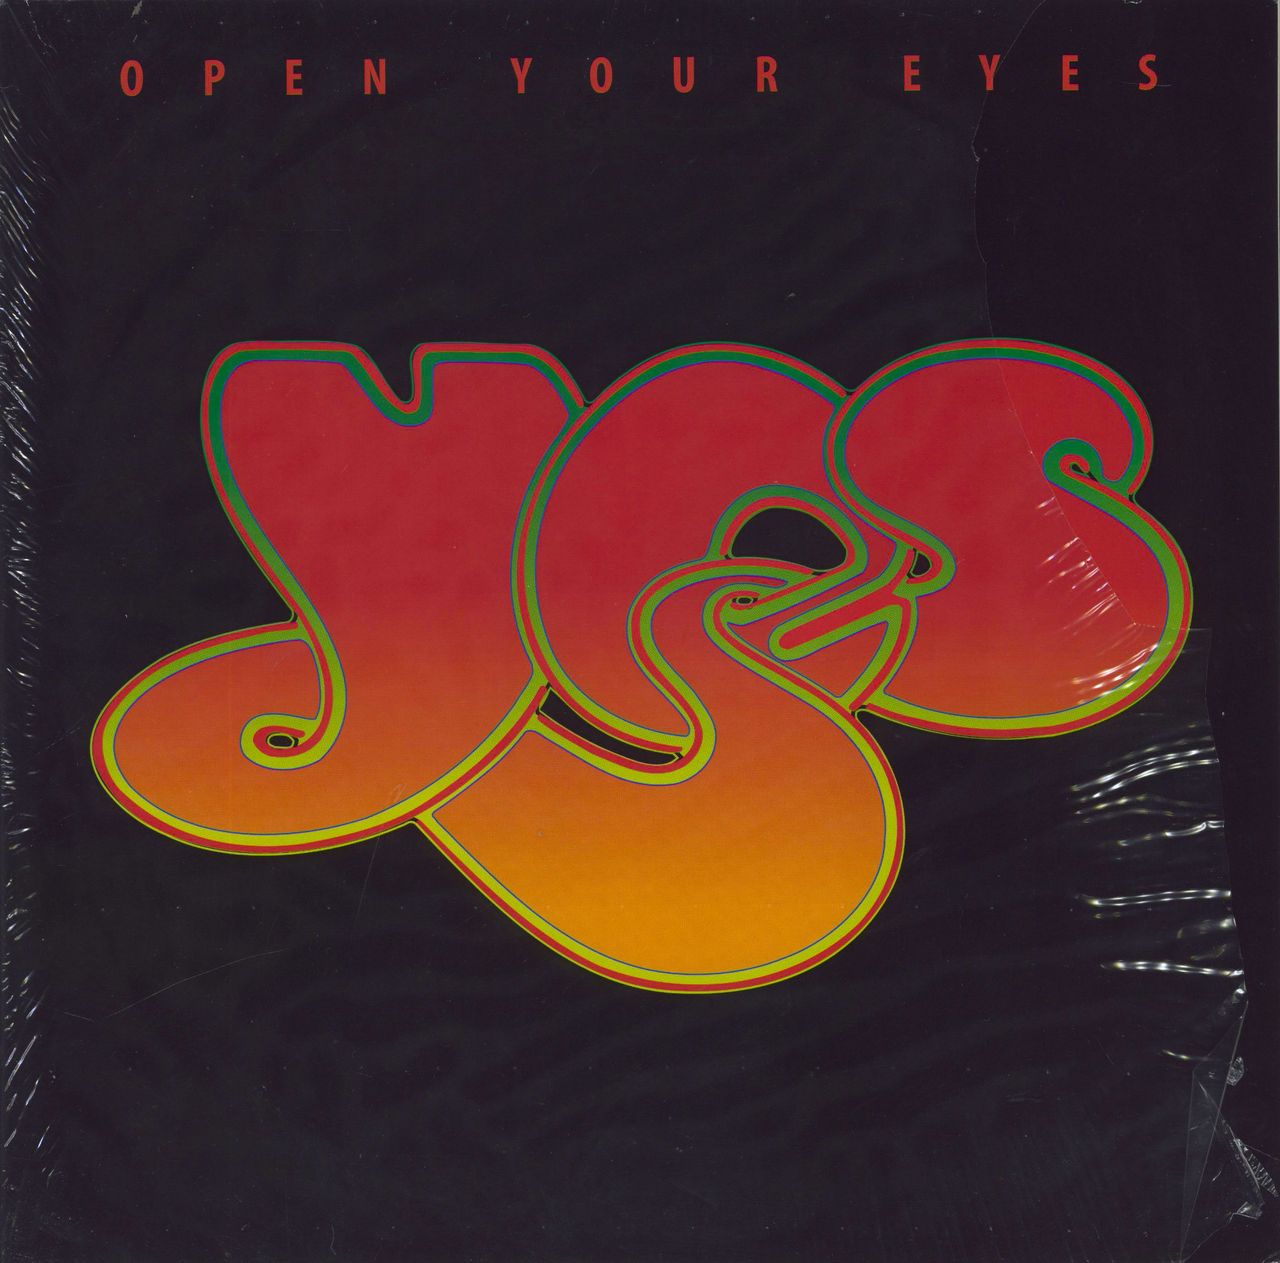 Yes Open Your Eyes - 180gm Vinyl - Shrink German 2-LP vinyl set